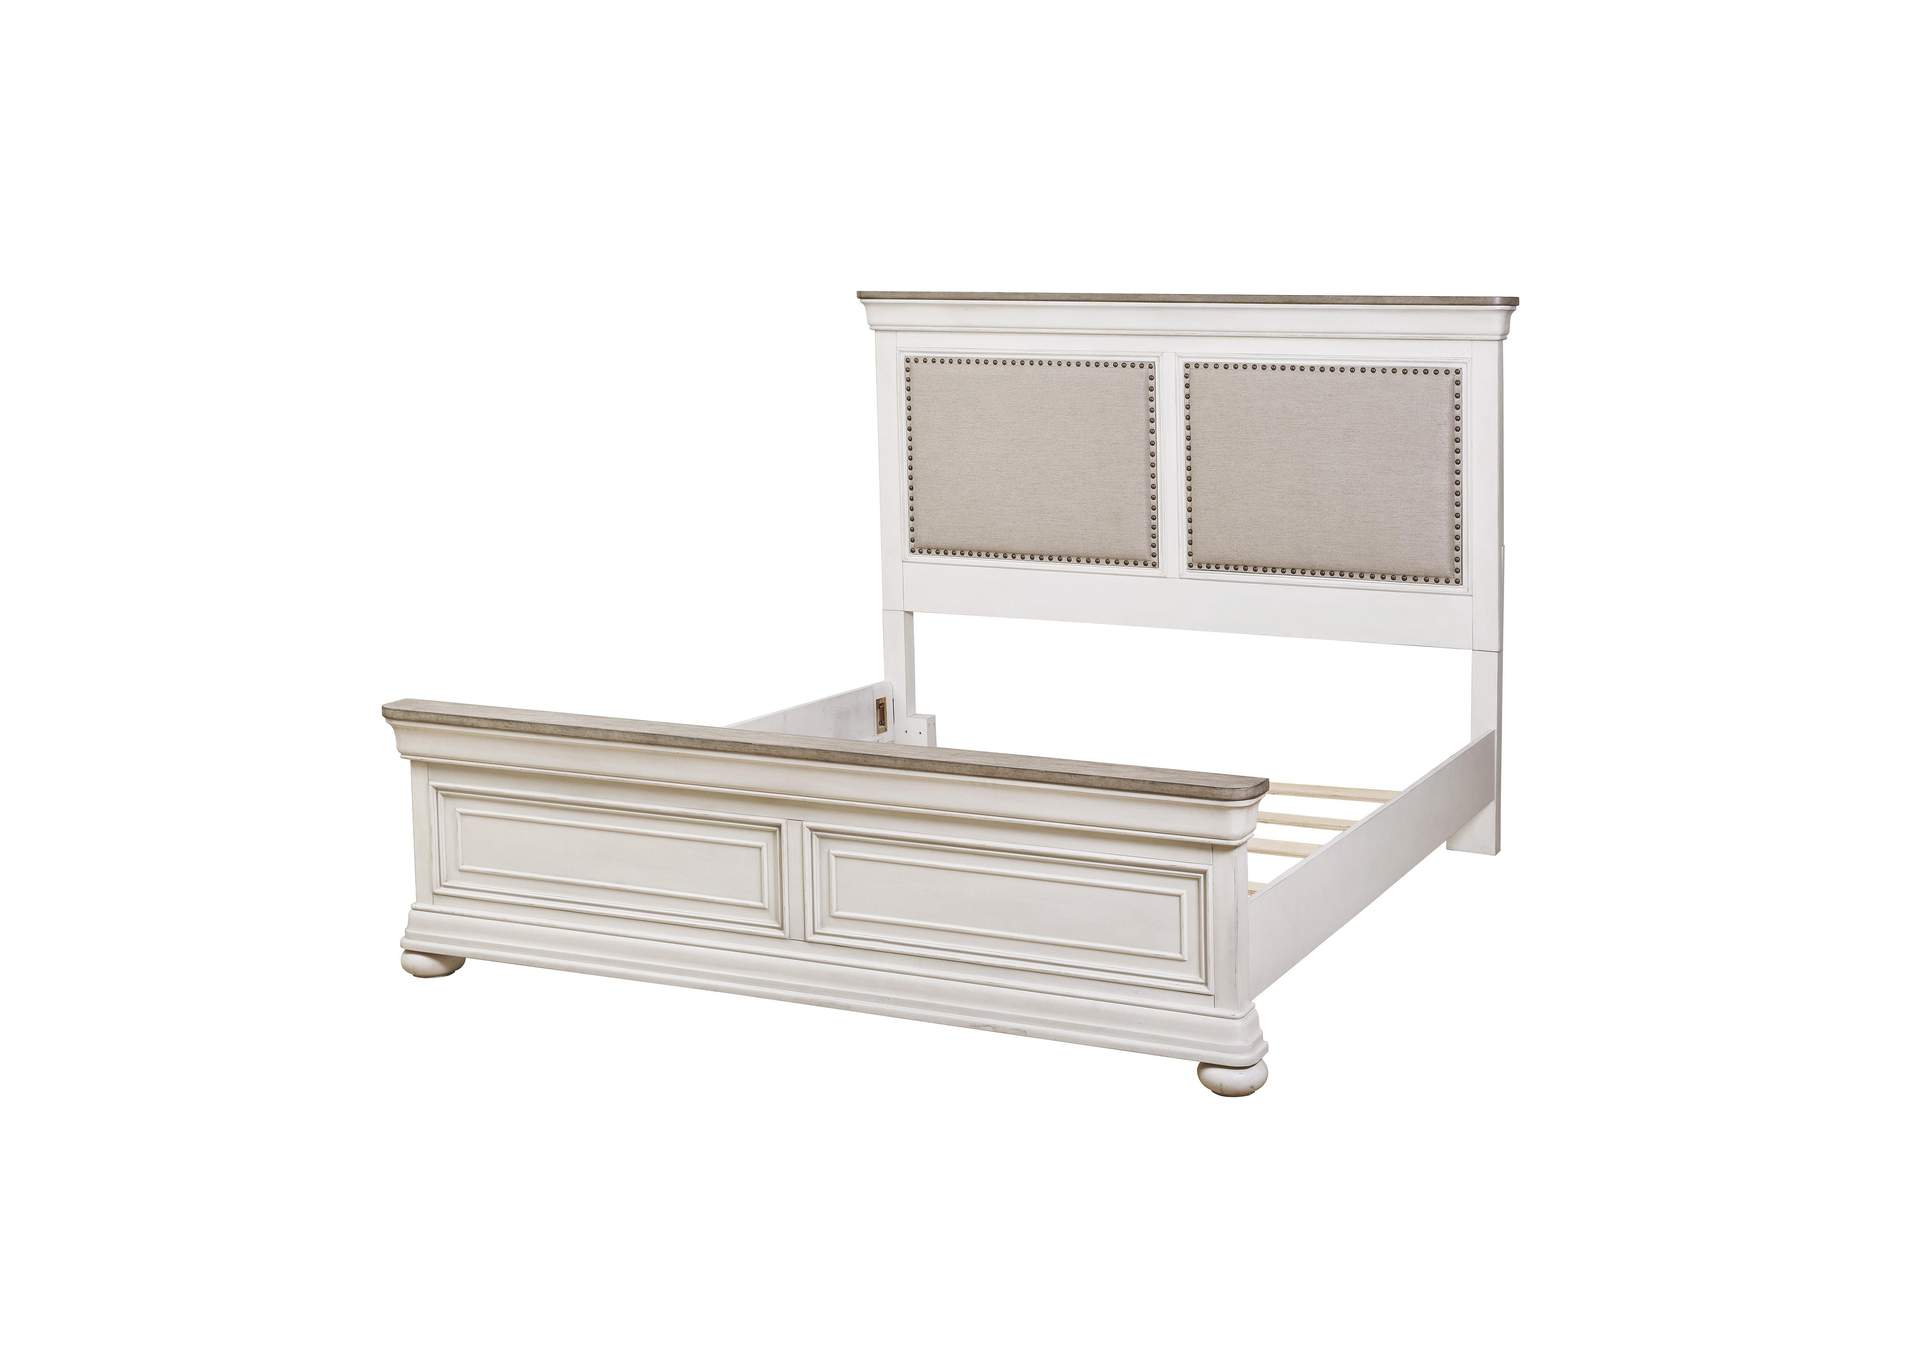 4 Piece Queen Bedroom Set - White,Pulaski Furniture